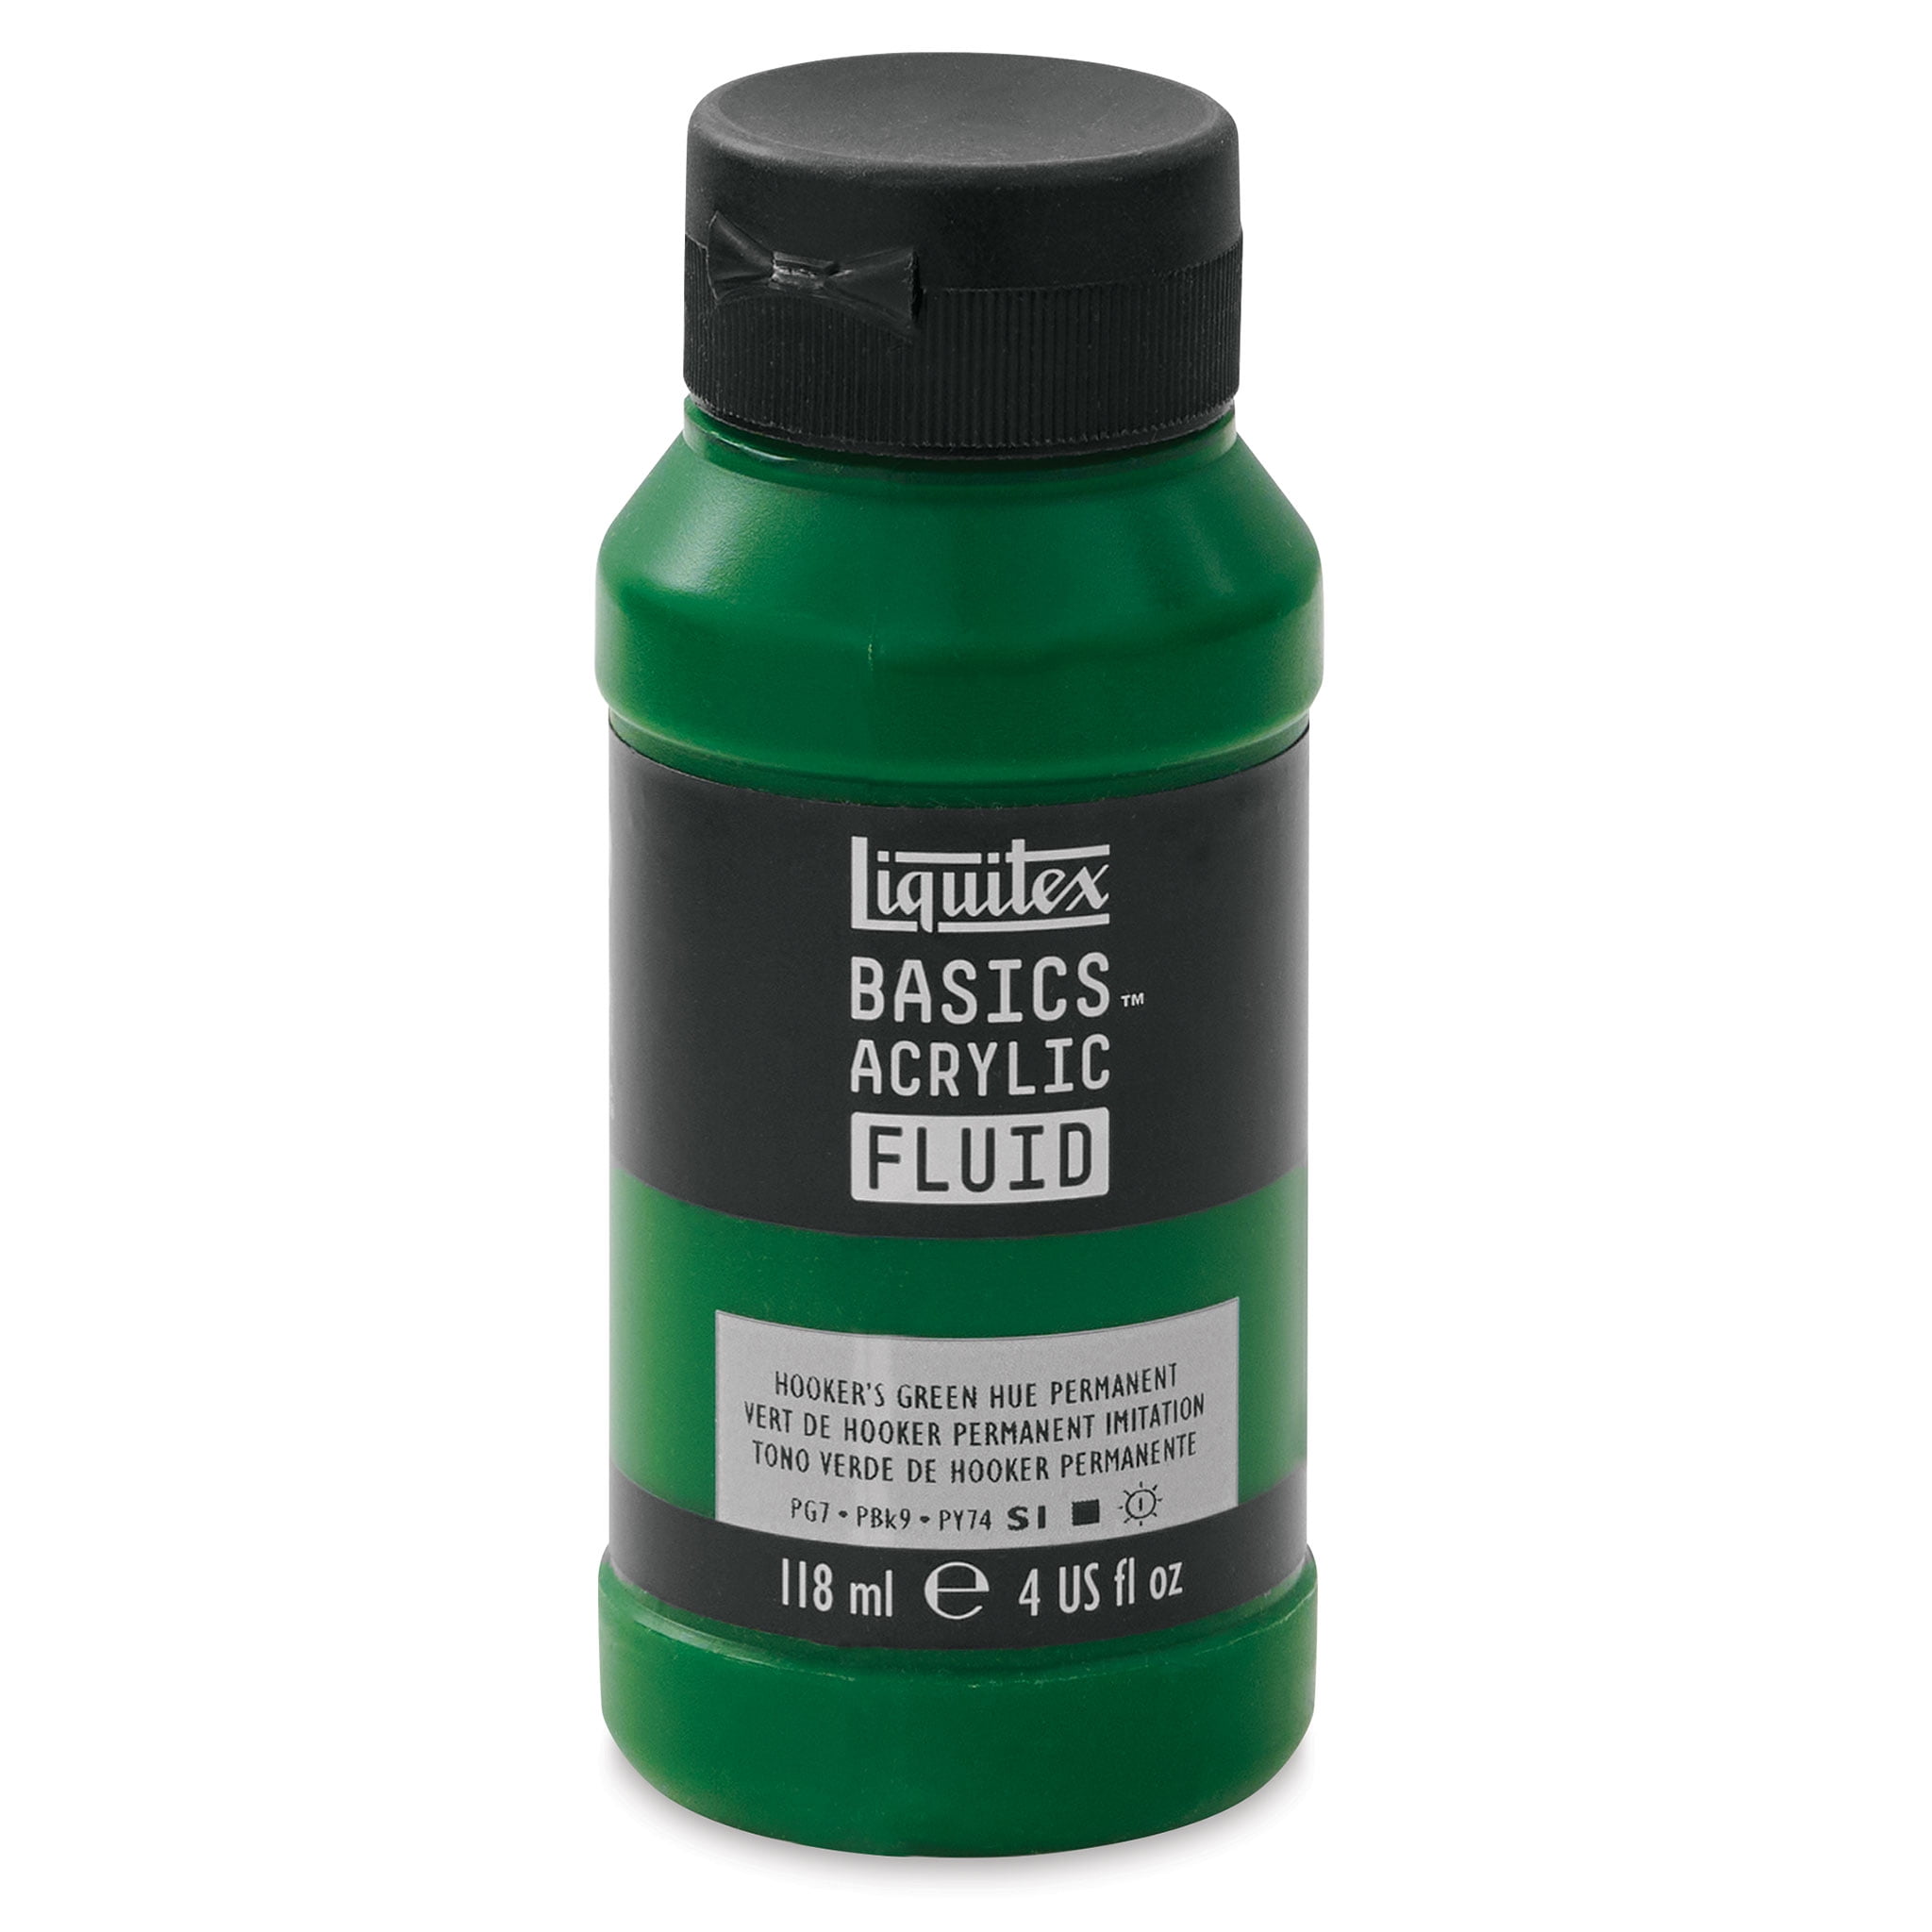 Liquitex Basics Acrylic Fluid 118ml Hooker's Green Hue Permanent